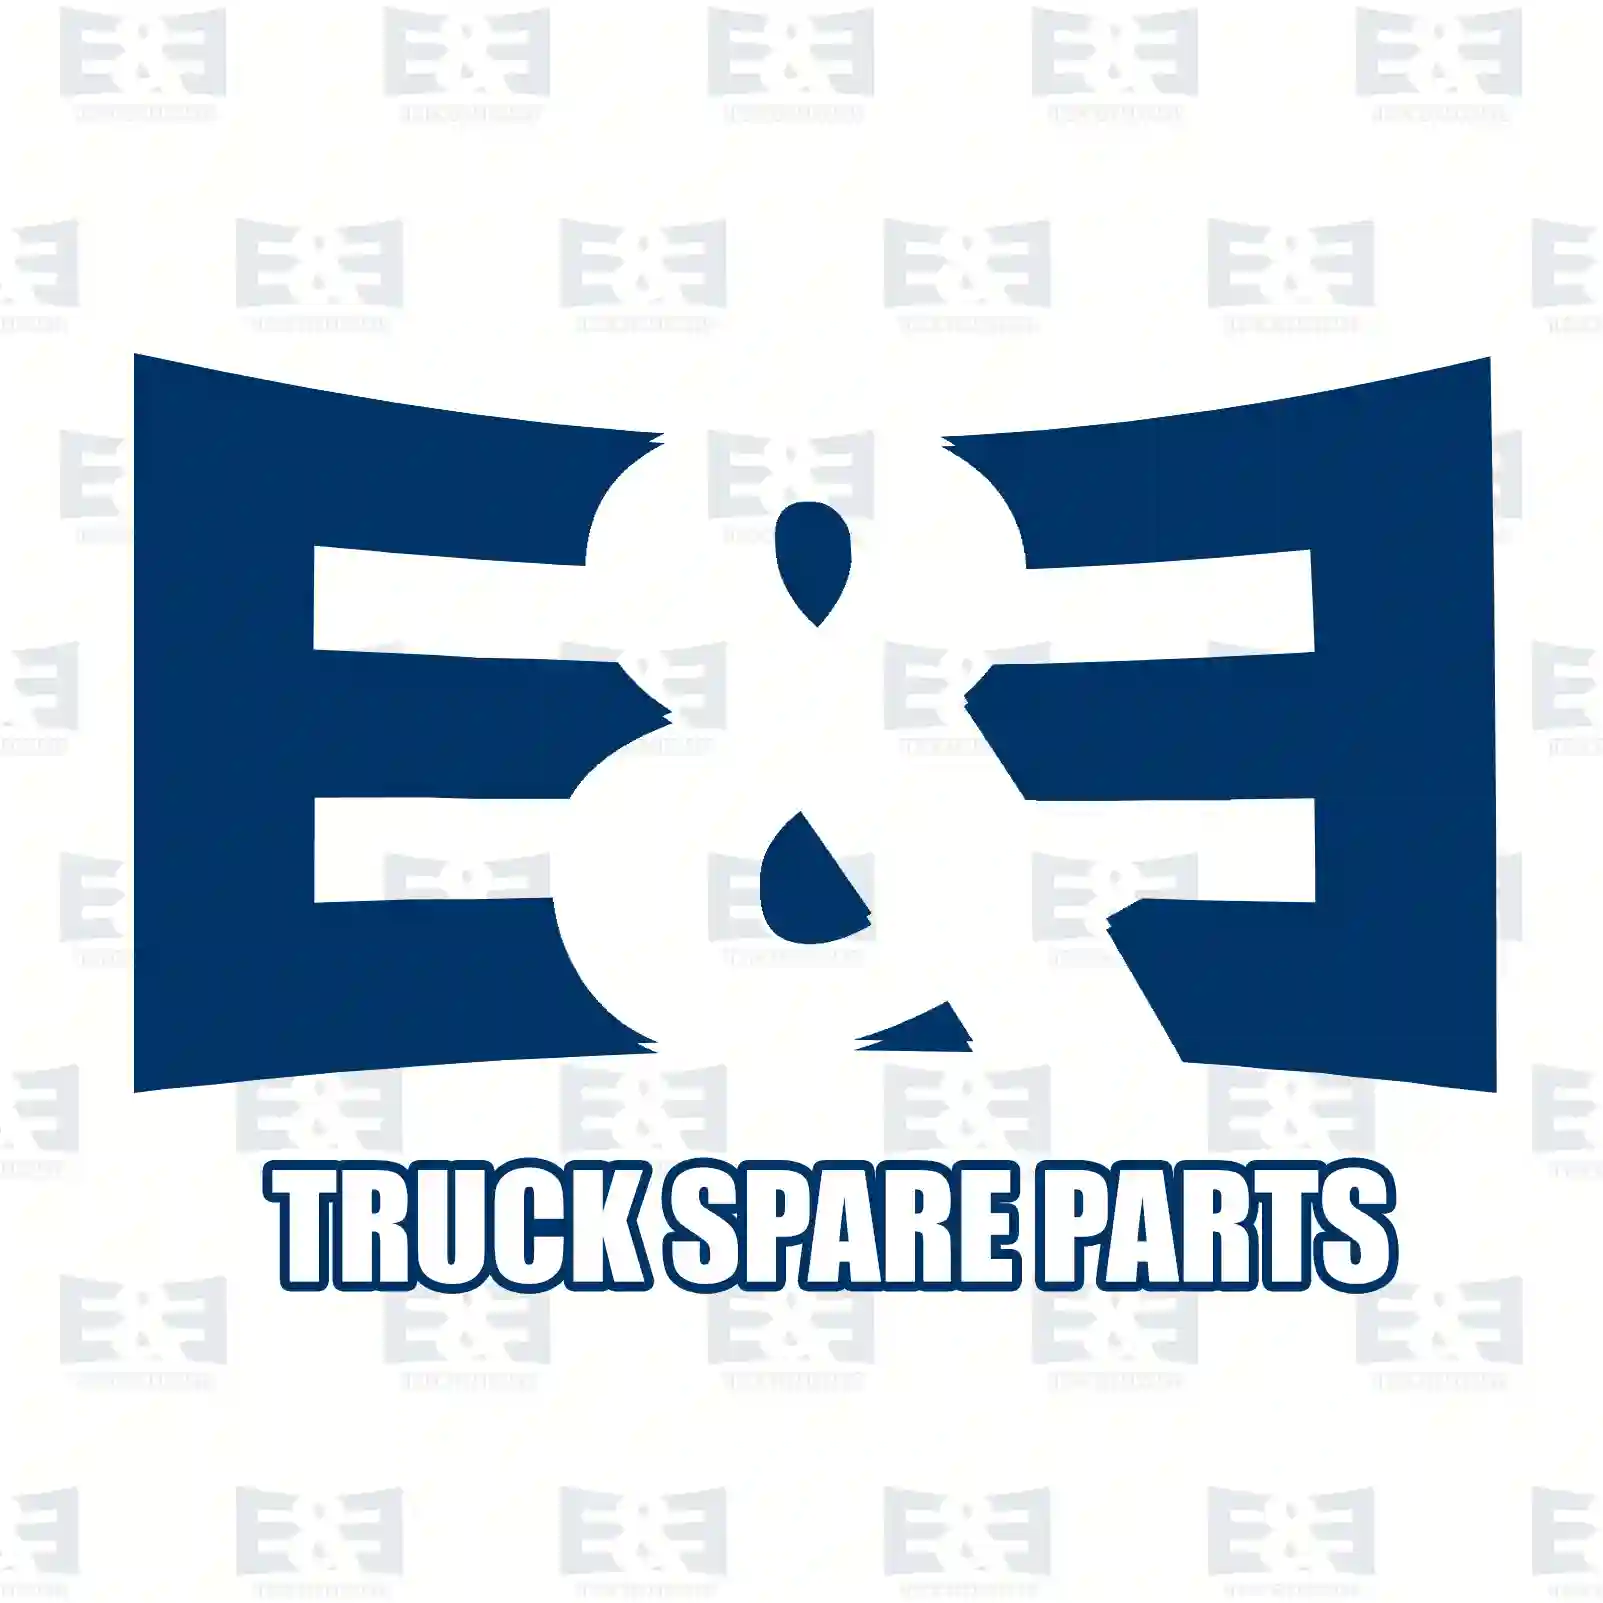 Synchronizer kit, 2E2278791, 1669358 ||  2E2278791 E&E Truck Spare Parts | Truck Spare Parts, Auotomotive Spare Parts Synchronizer kit, 2E2278791, 1669358 ||  2E2278791 E&E Truck Spare Parts | Truck Spare Parts, Auotomotive Spare Parts